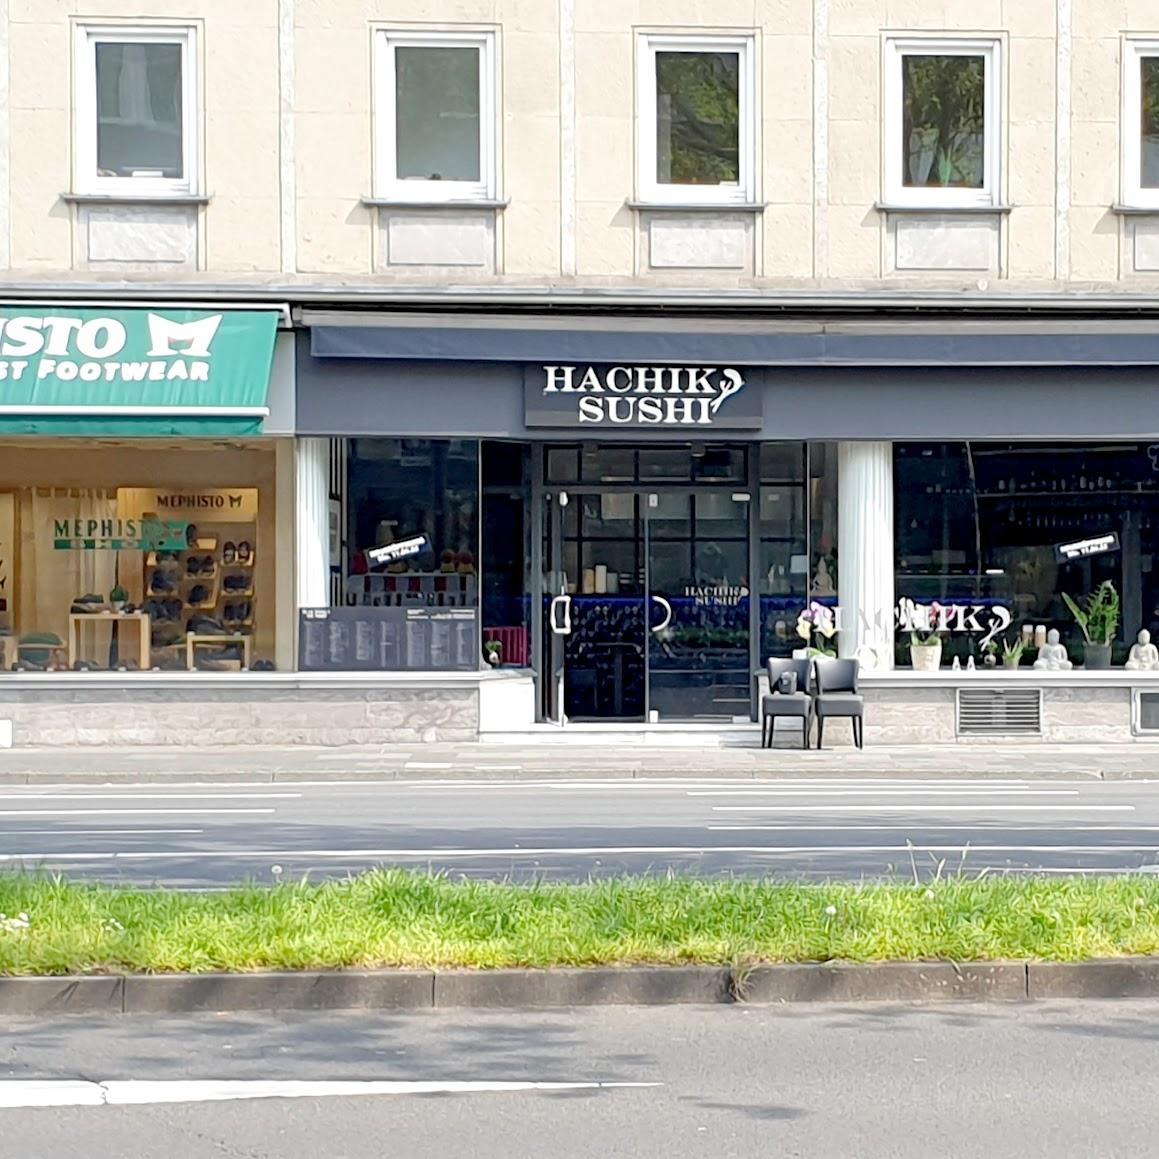 Restaurant "Hachiko Sushi Köln" in Köln